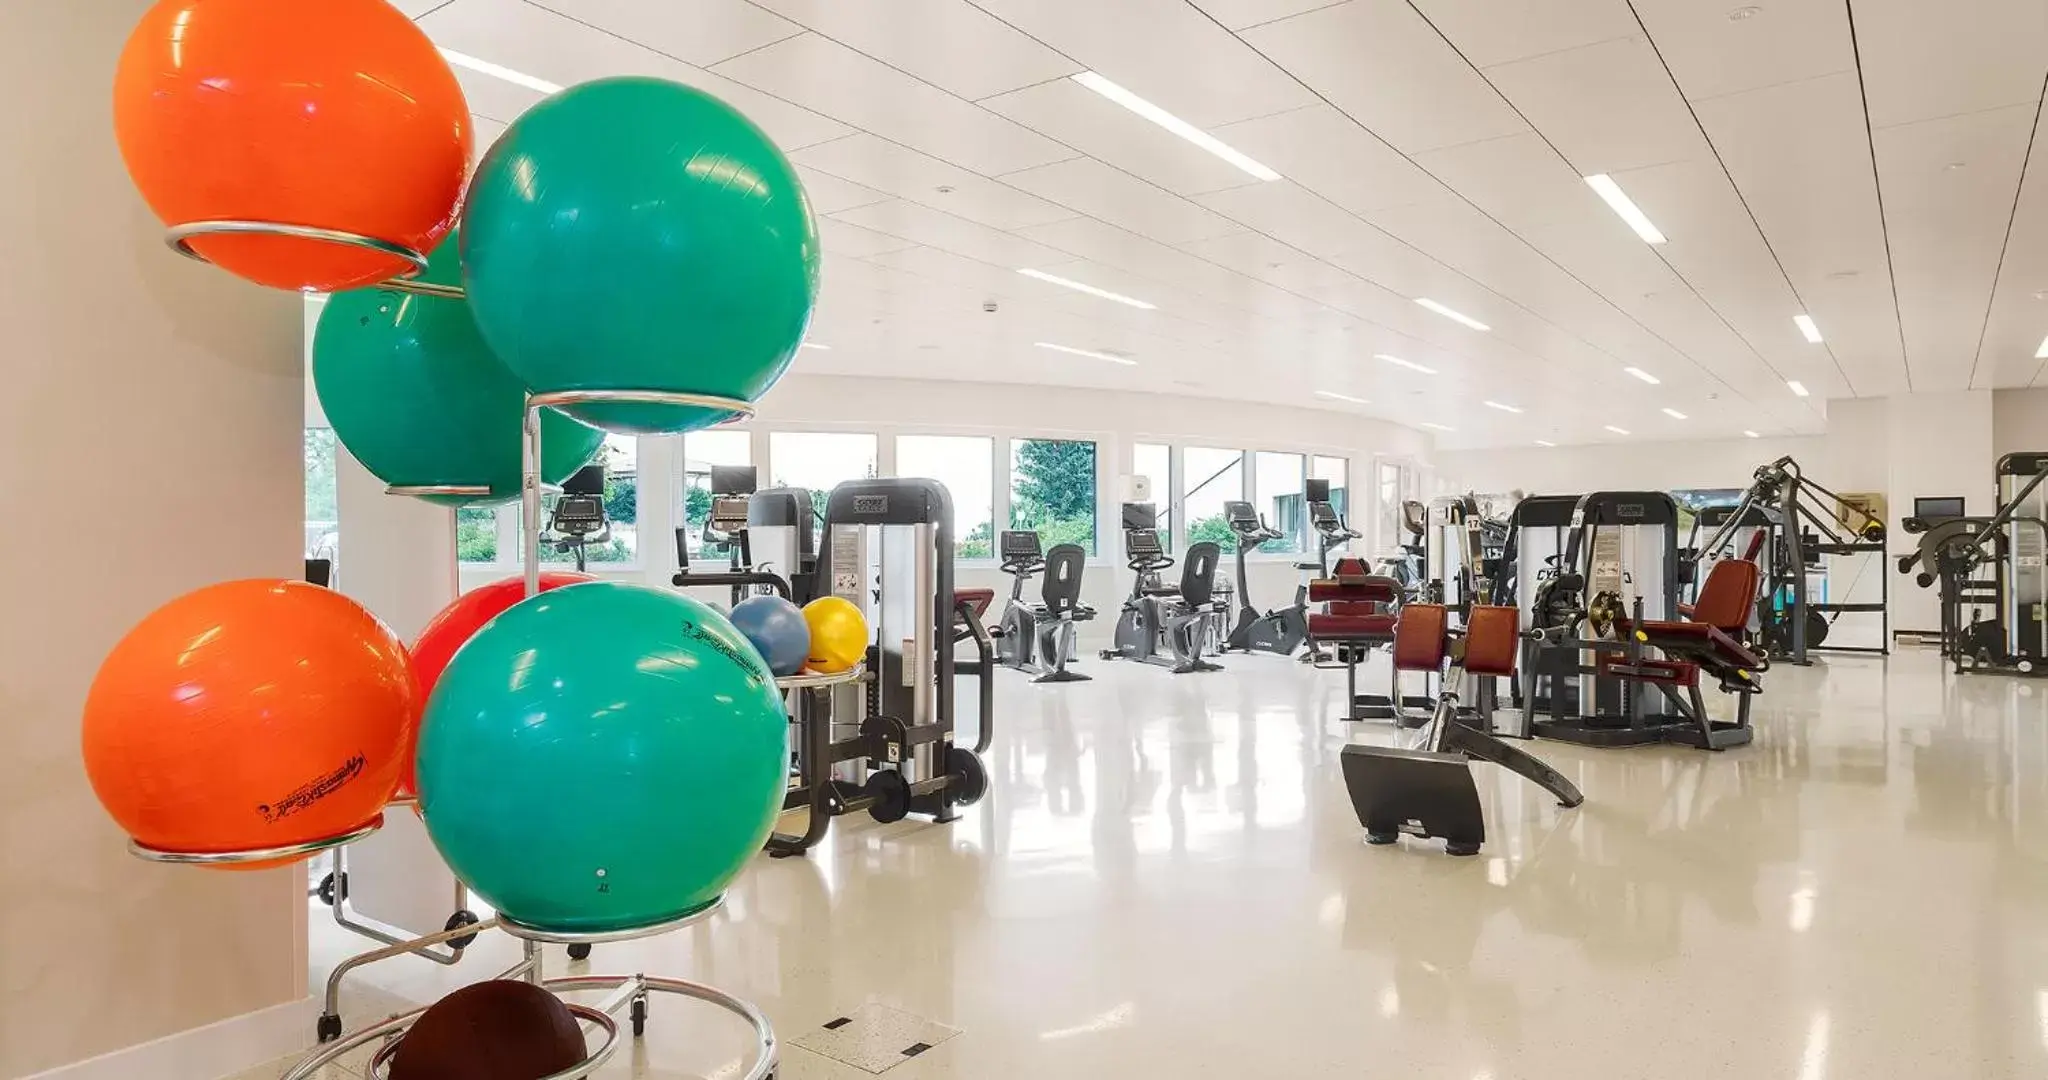 Fitness centre/facilities, Fitness Center/Facilities in Oberwaid - Das Hotel.